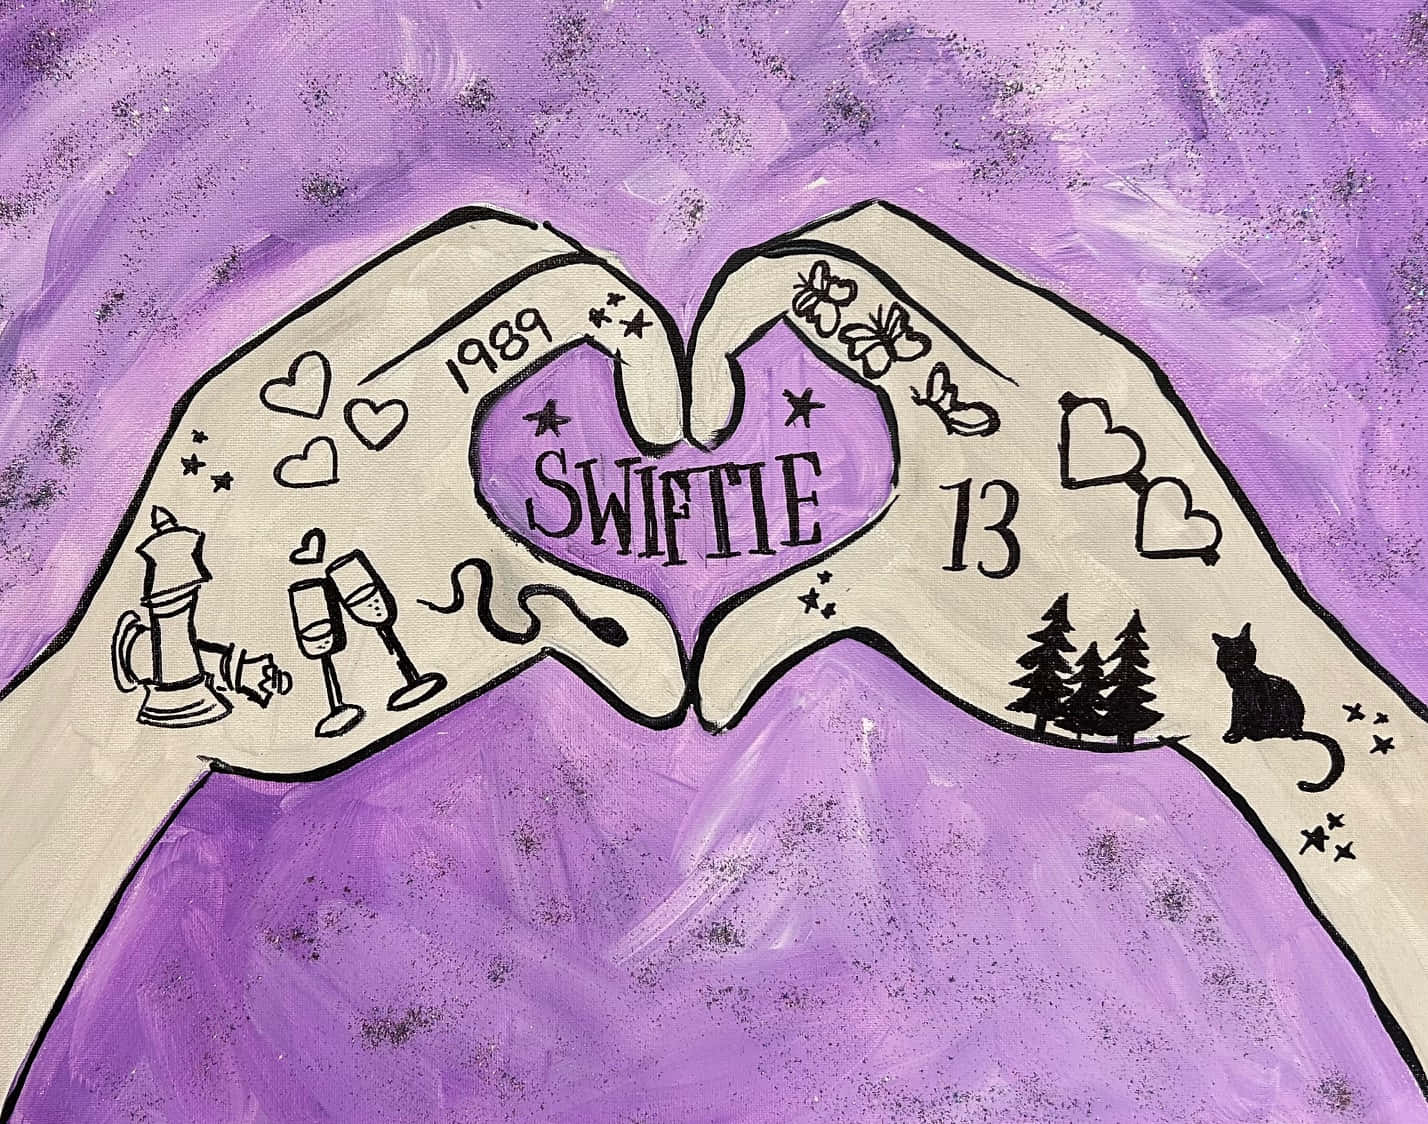 Swiftie Heart Hands Artwork Wallpaper